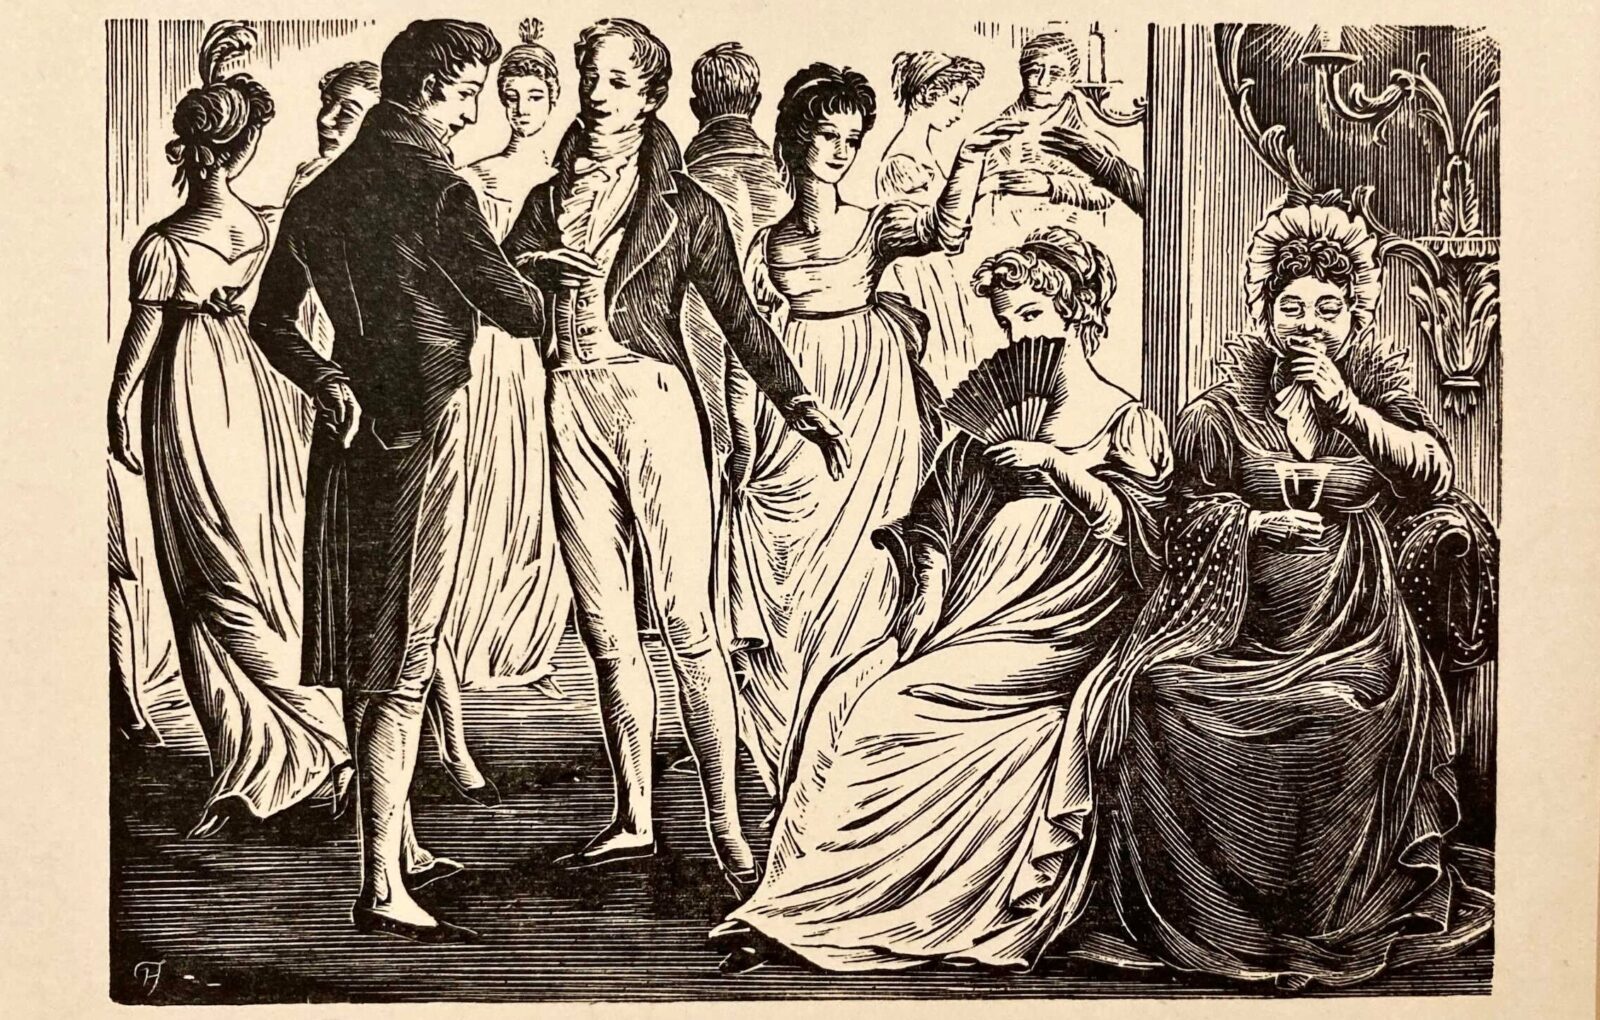 Woodcut illustration by Joan Hassel for Pride & Prejudice, showing a glamorous Regency ballroom